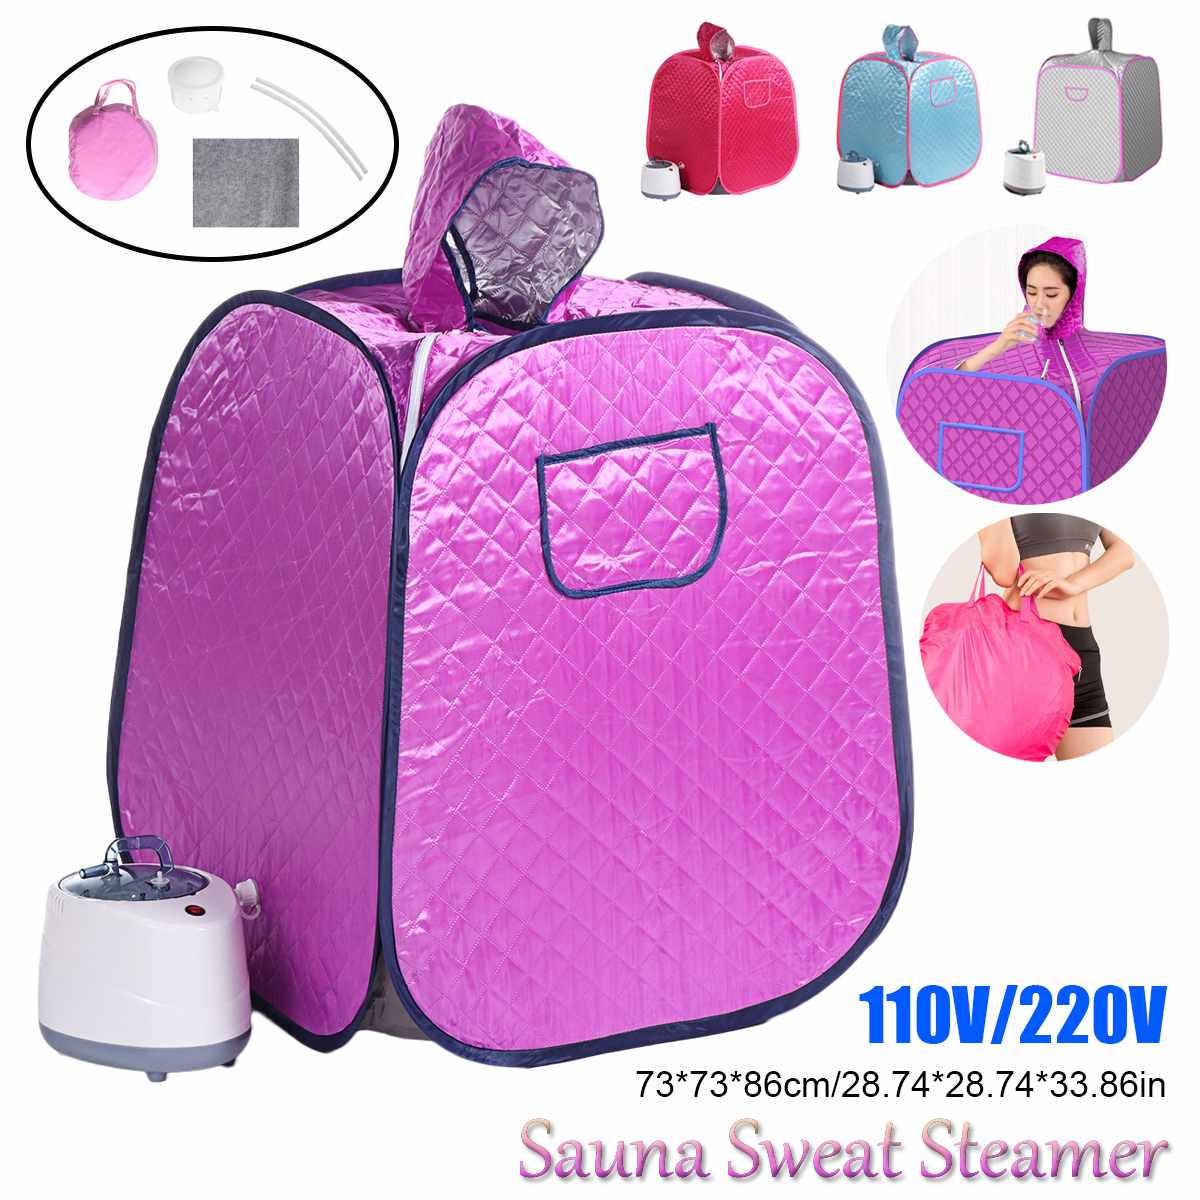 Portable Sauna Bag Steam Shower Generator Infrared SPA Loss Weight Calories Burned Sauna Tent Room Shower Cabin Bathhouse HWC